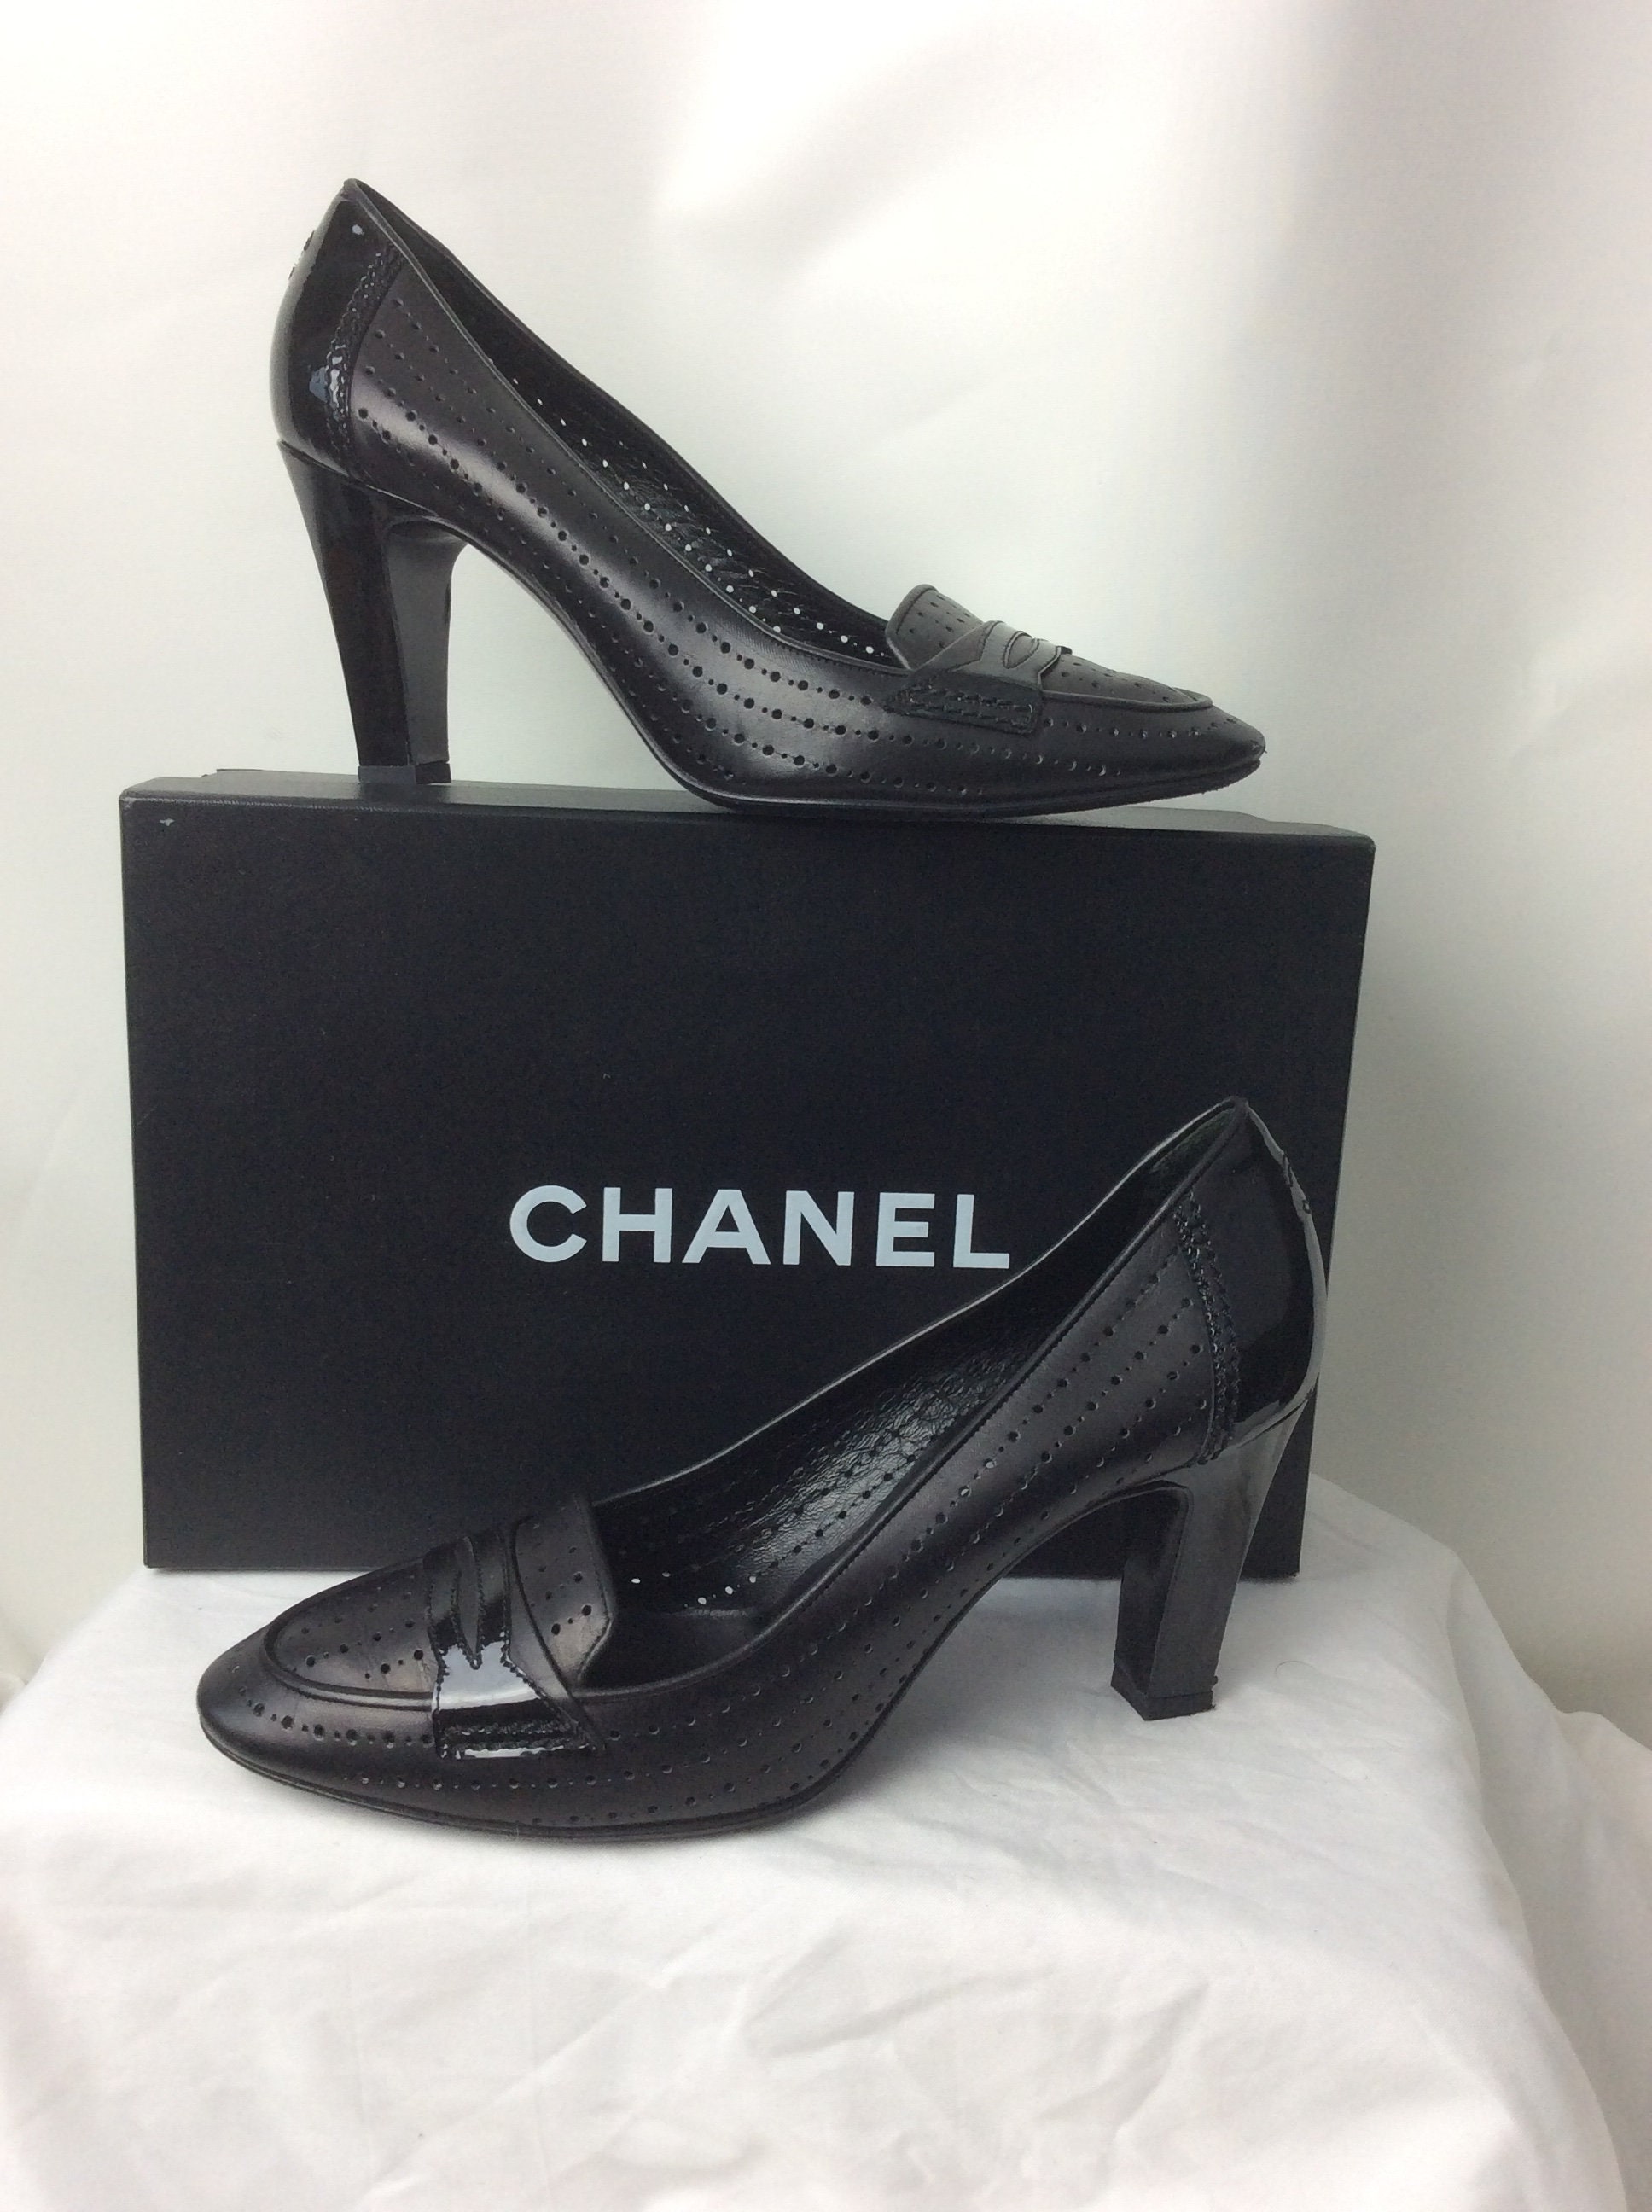 Vintage Chanel Cap Toe Mary Janes Black Suede Size 6 Kitten Heel Pumps